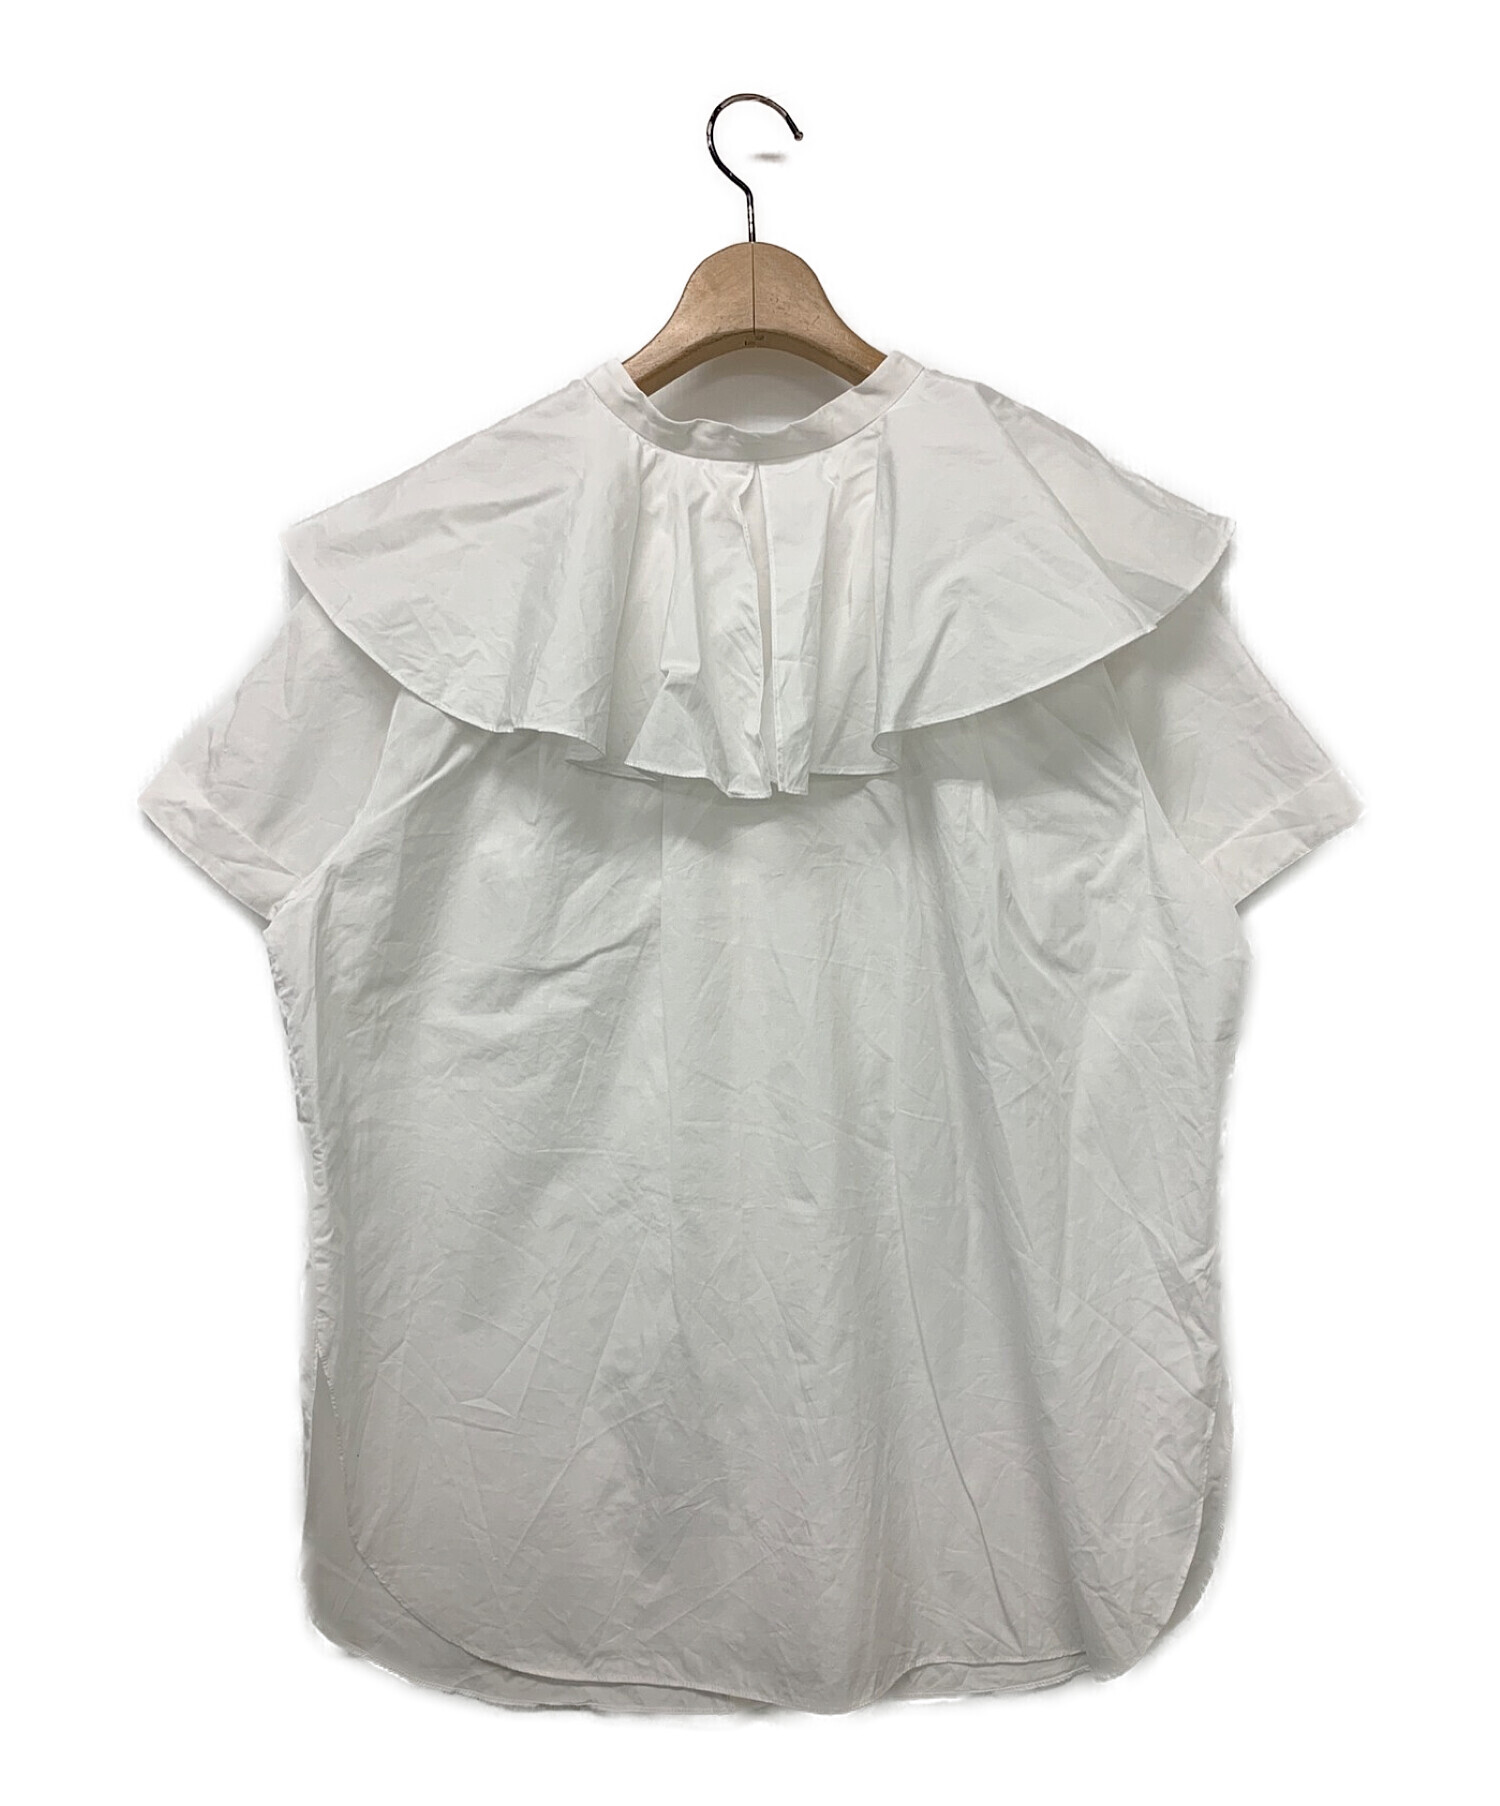 CADUNE (カデュネ) フリルバンドカラーシャツ ホワイト サイズ:36